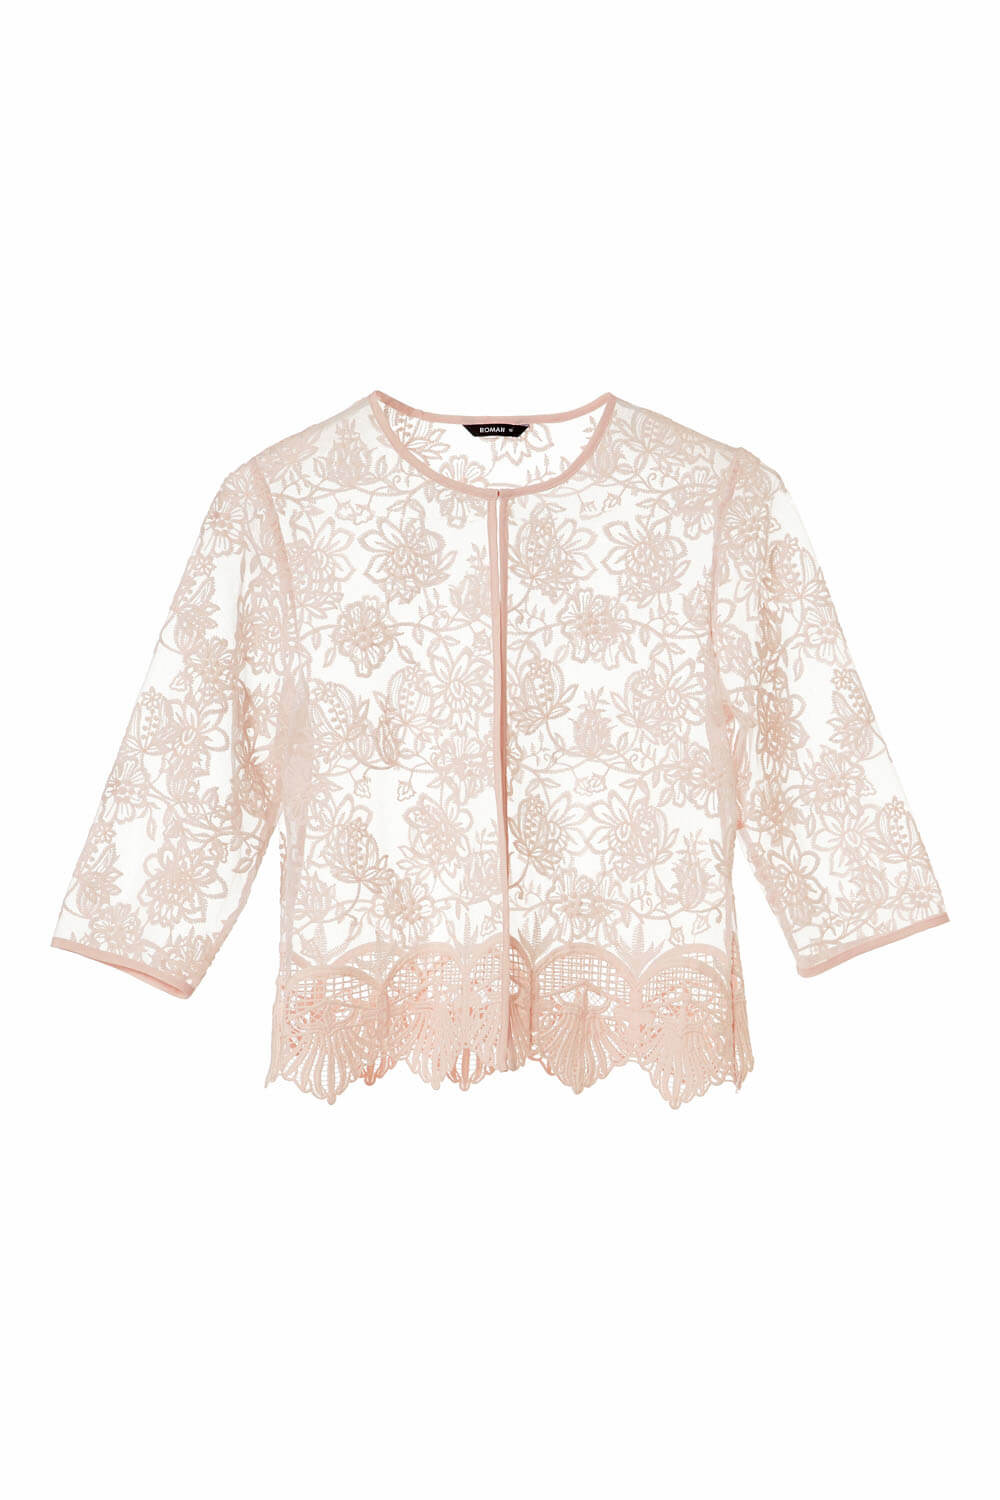 Light Pink Short Floral Embroidered Lace Jacket, Image 5 of 5